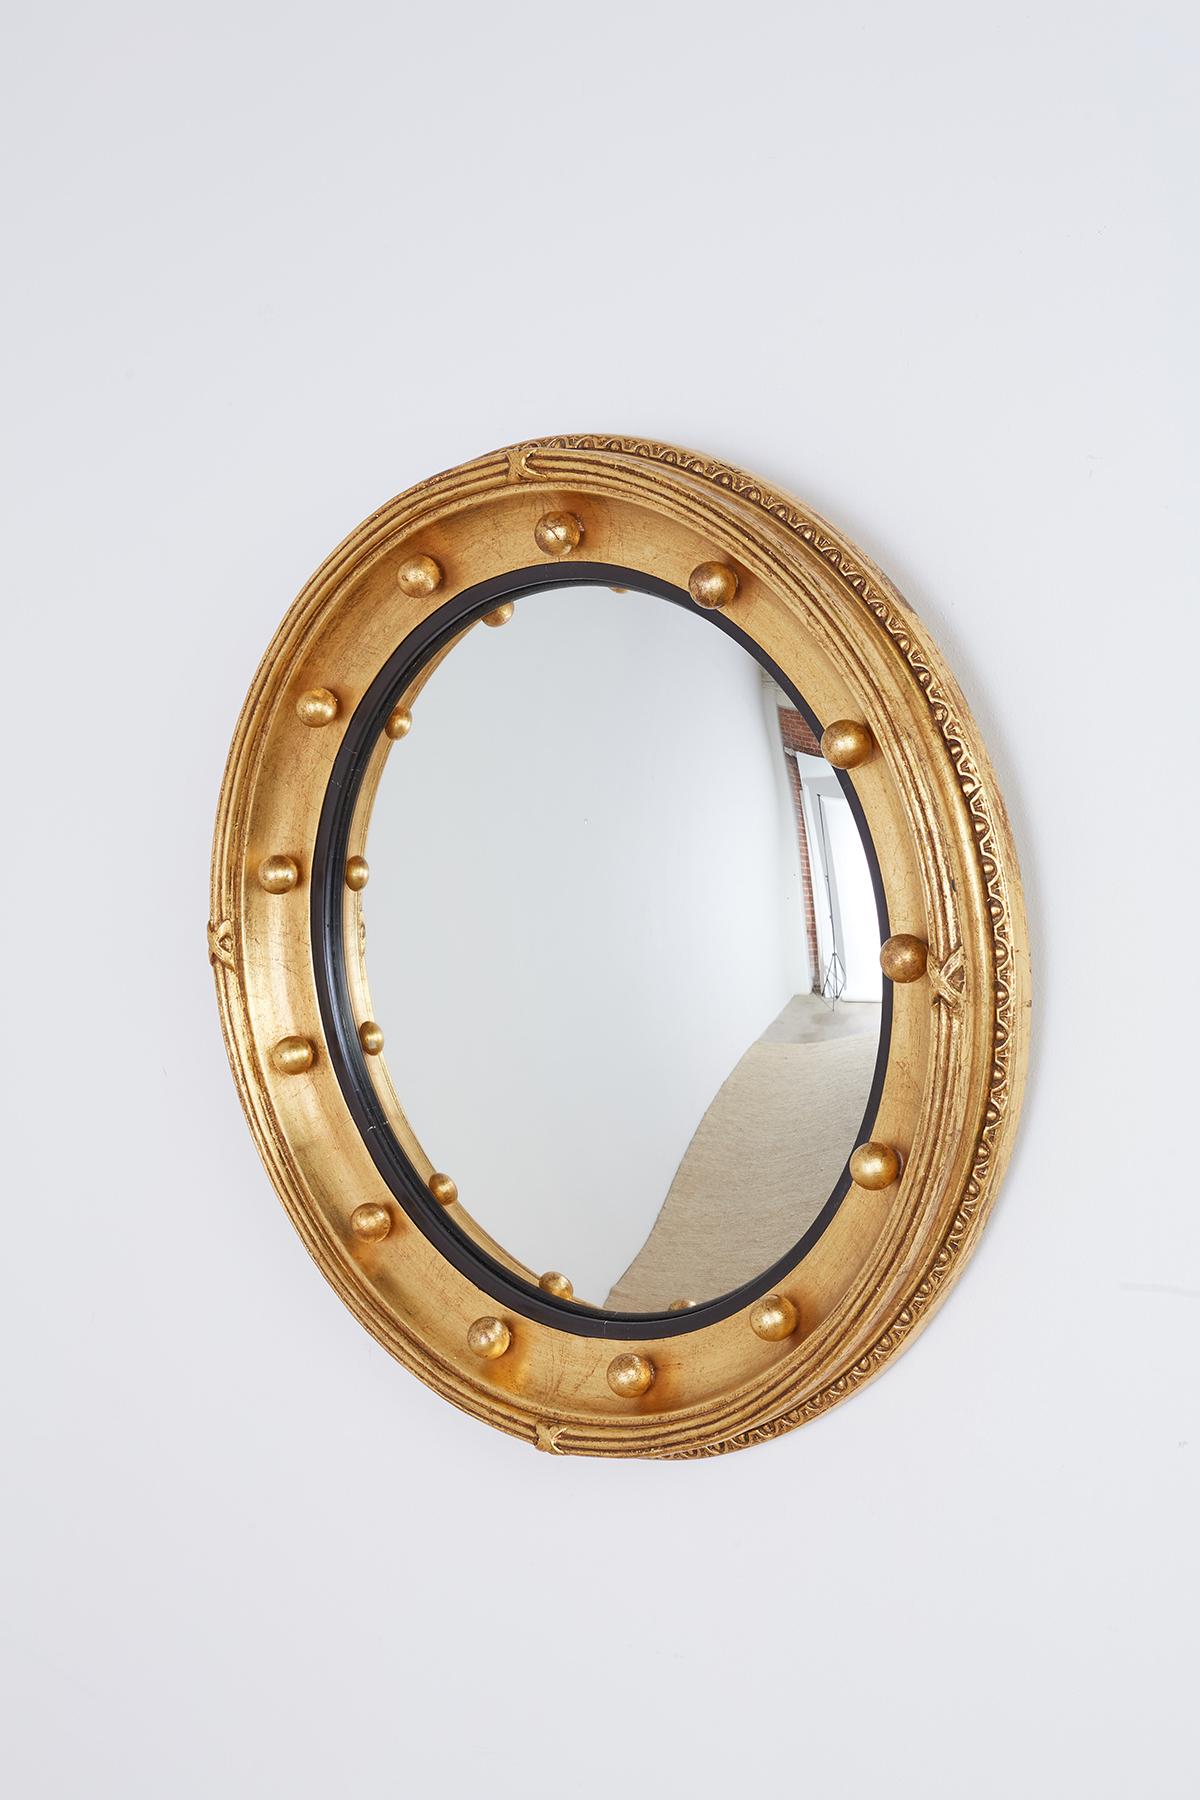 American English Regency Style Round Convex Bullseye Mirror